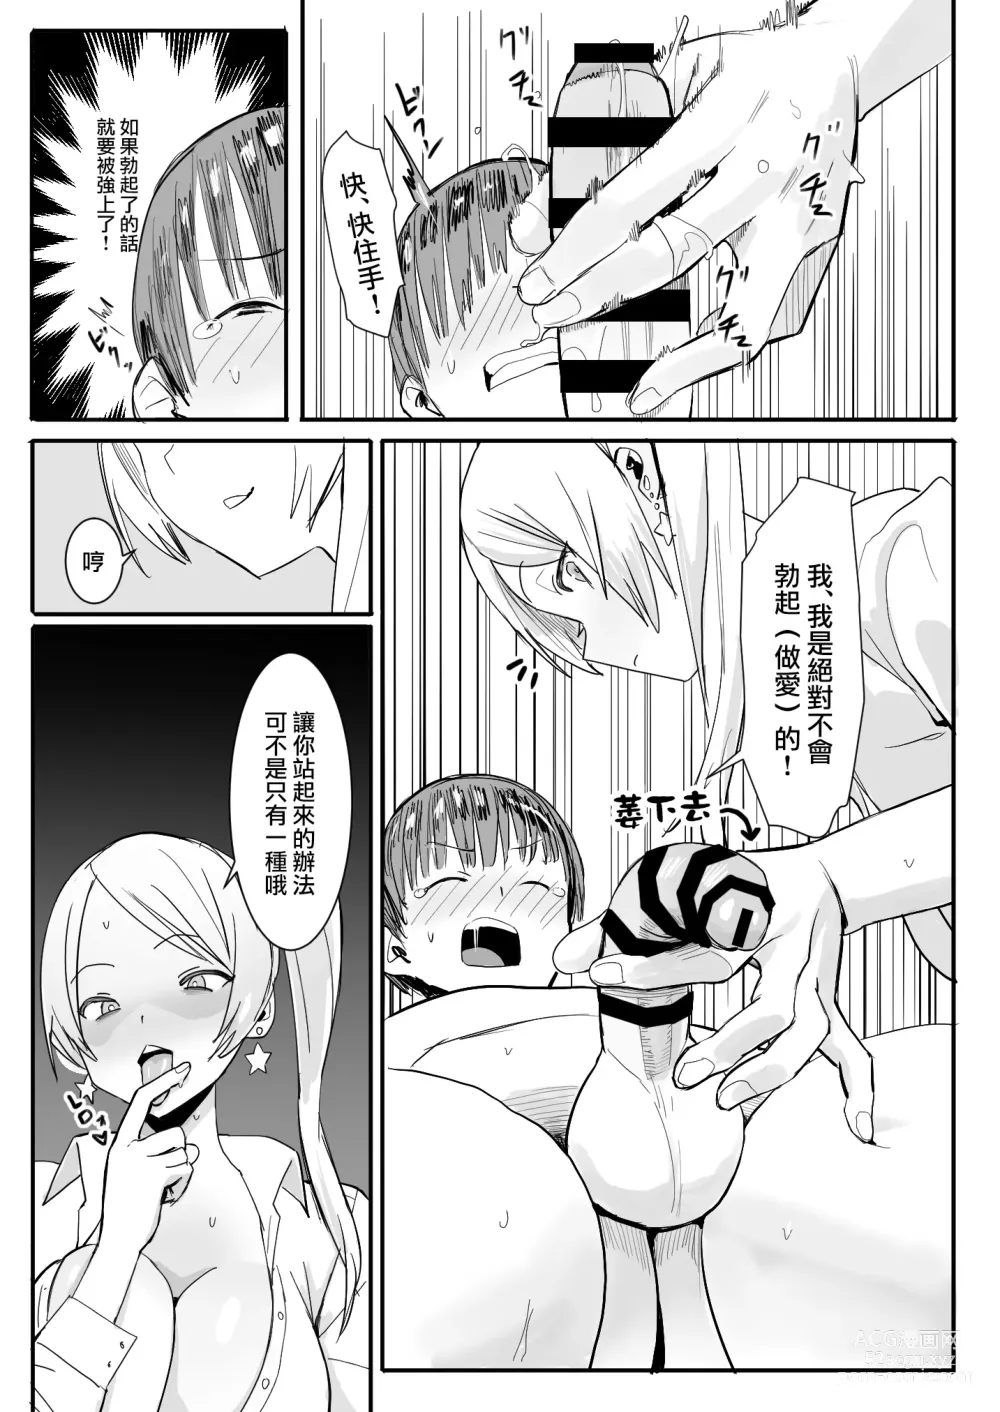 Page 7 of doujinshi 在貞操觀念逆轉的世界中被綁架監禁